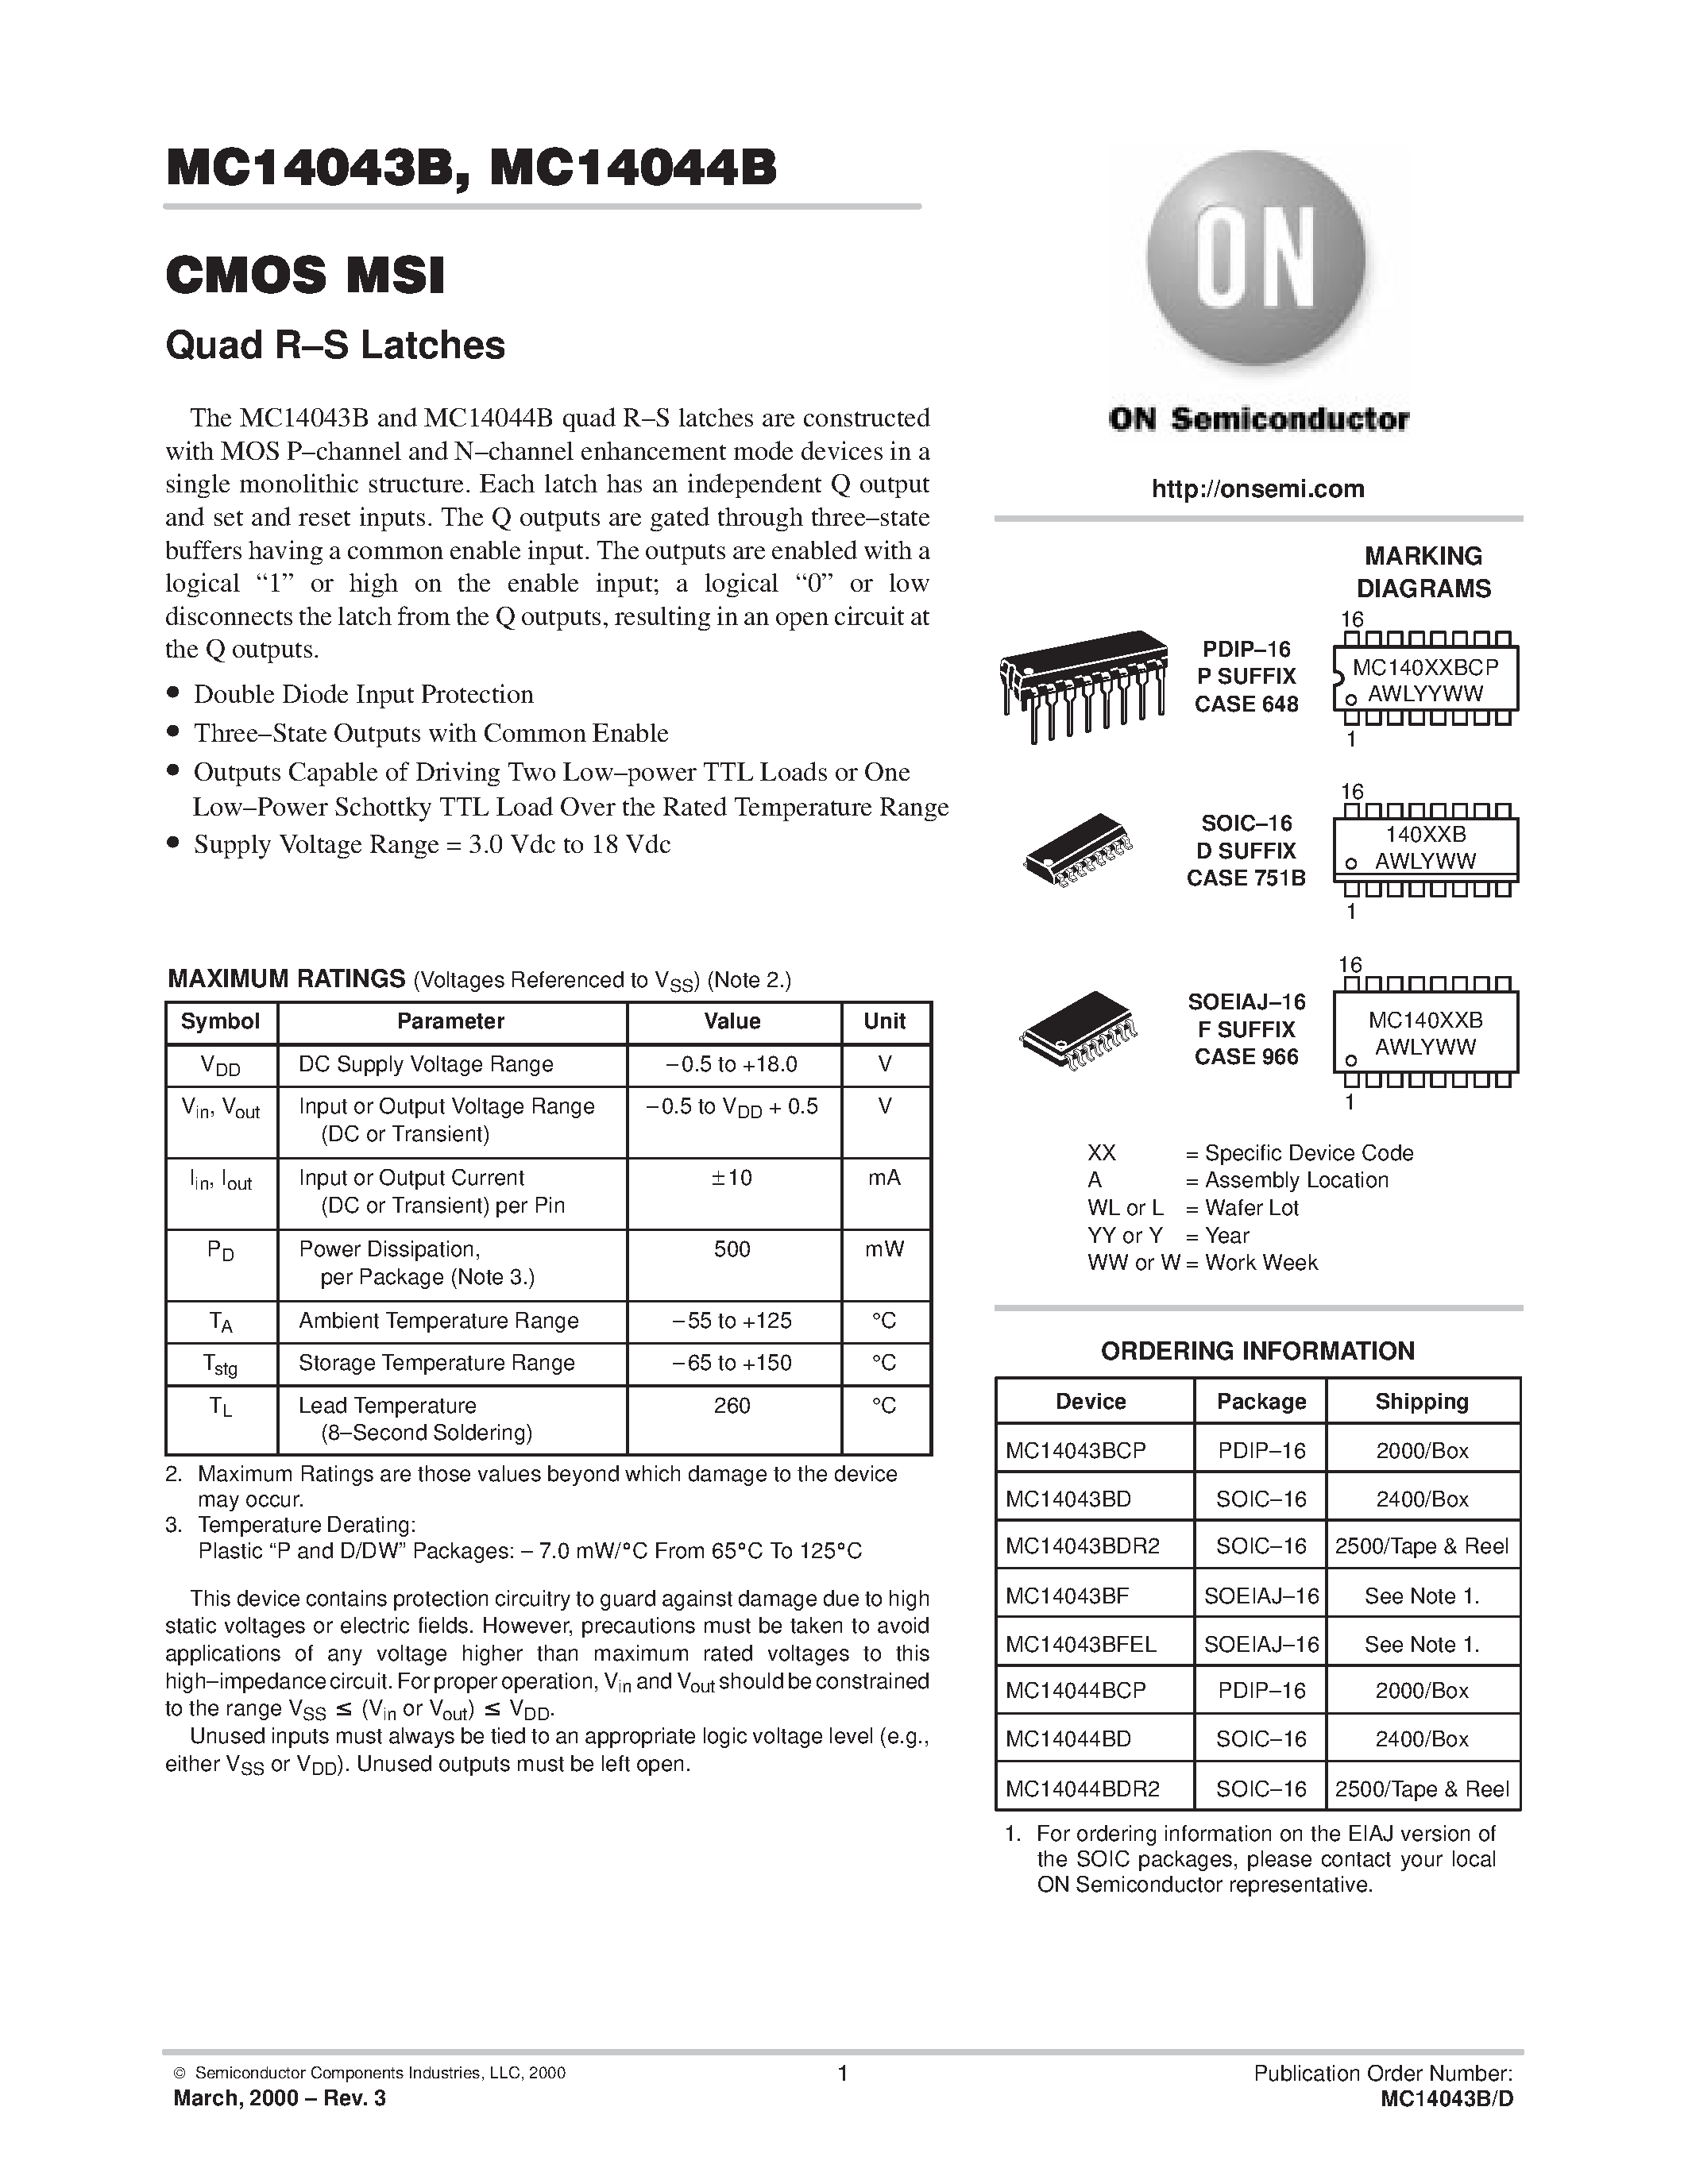 Даташит MC14043BDR2 - CMOS MSI(Quad R-S Latches) страница 1